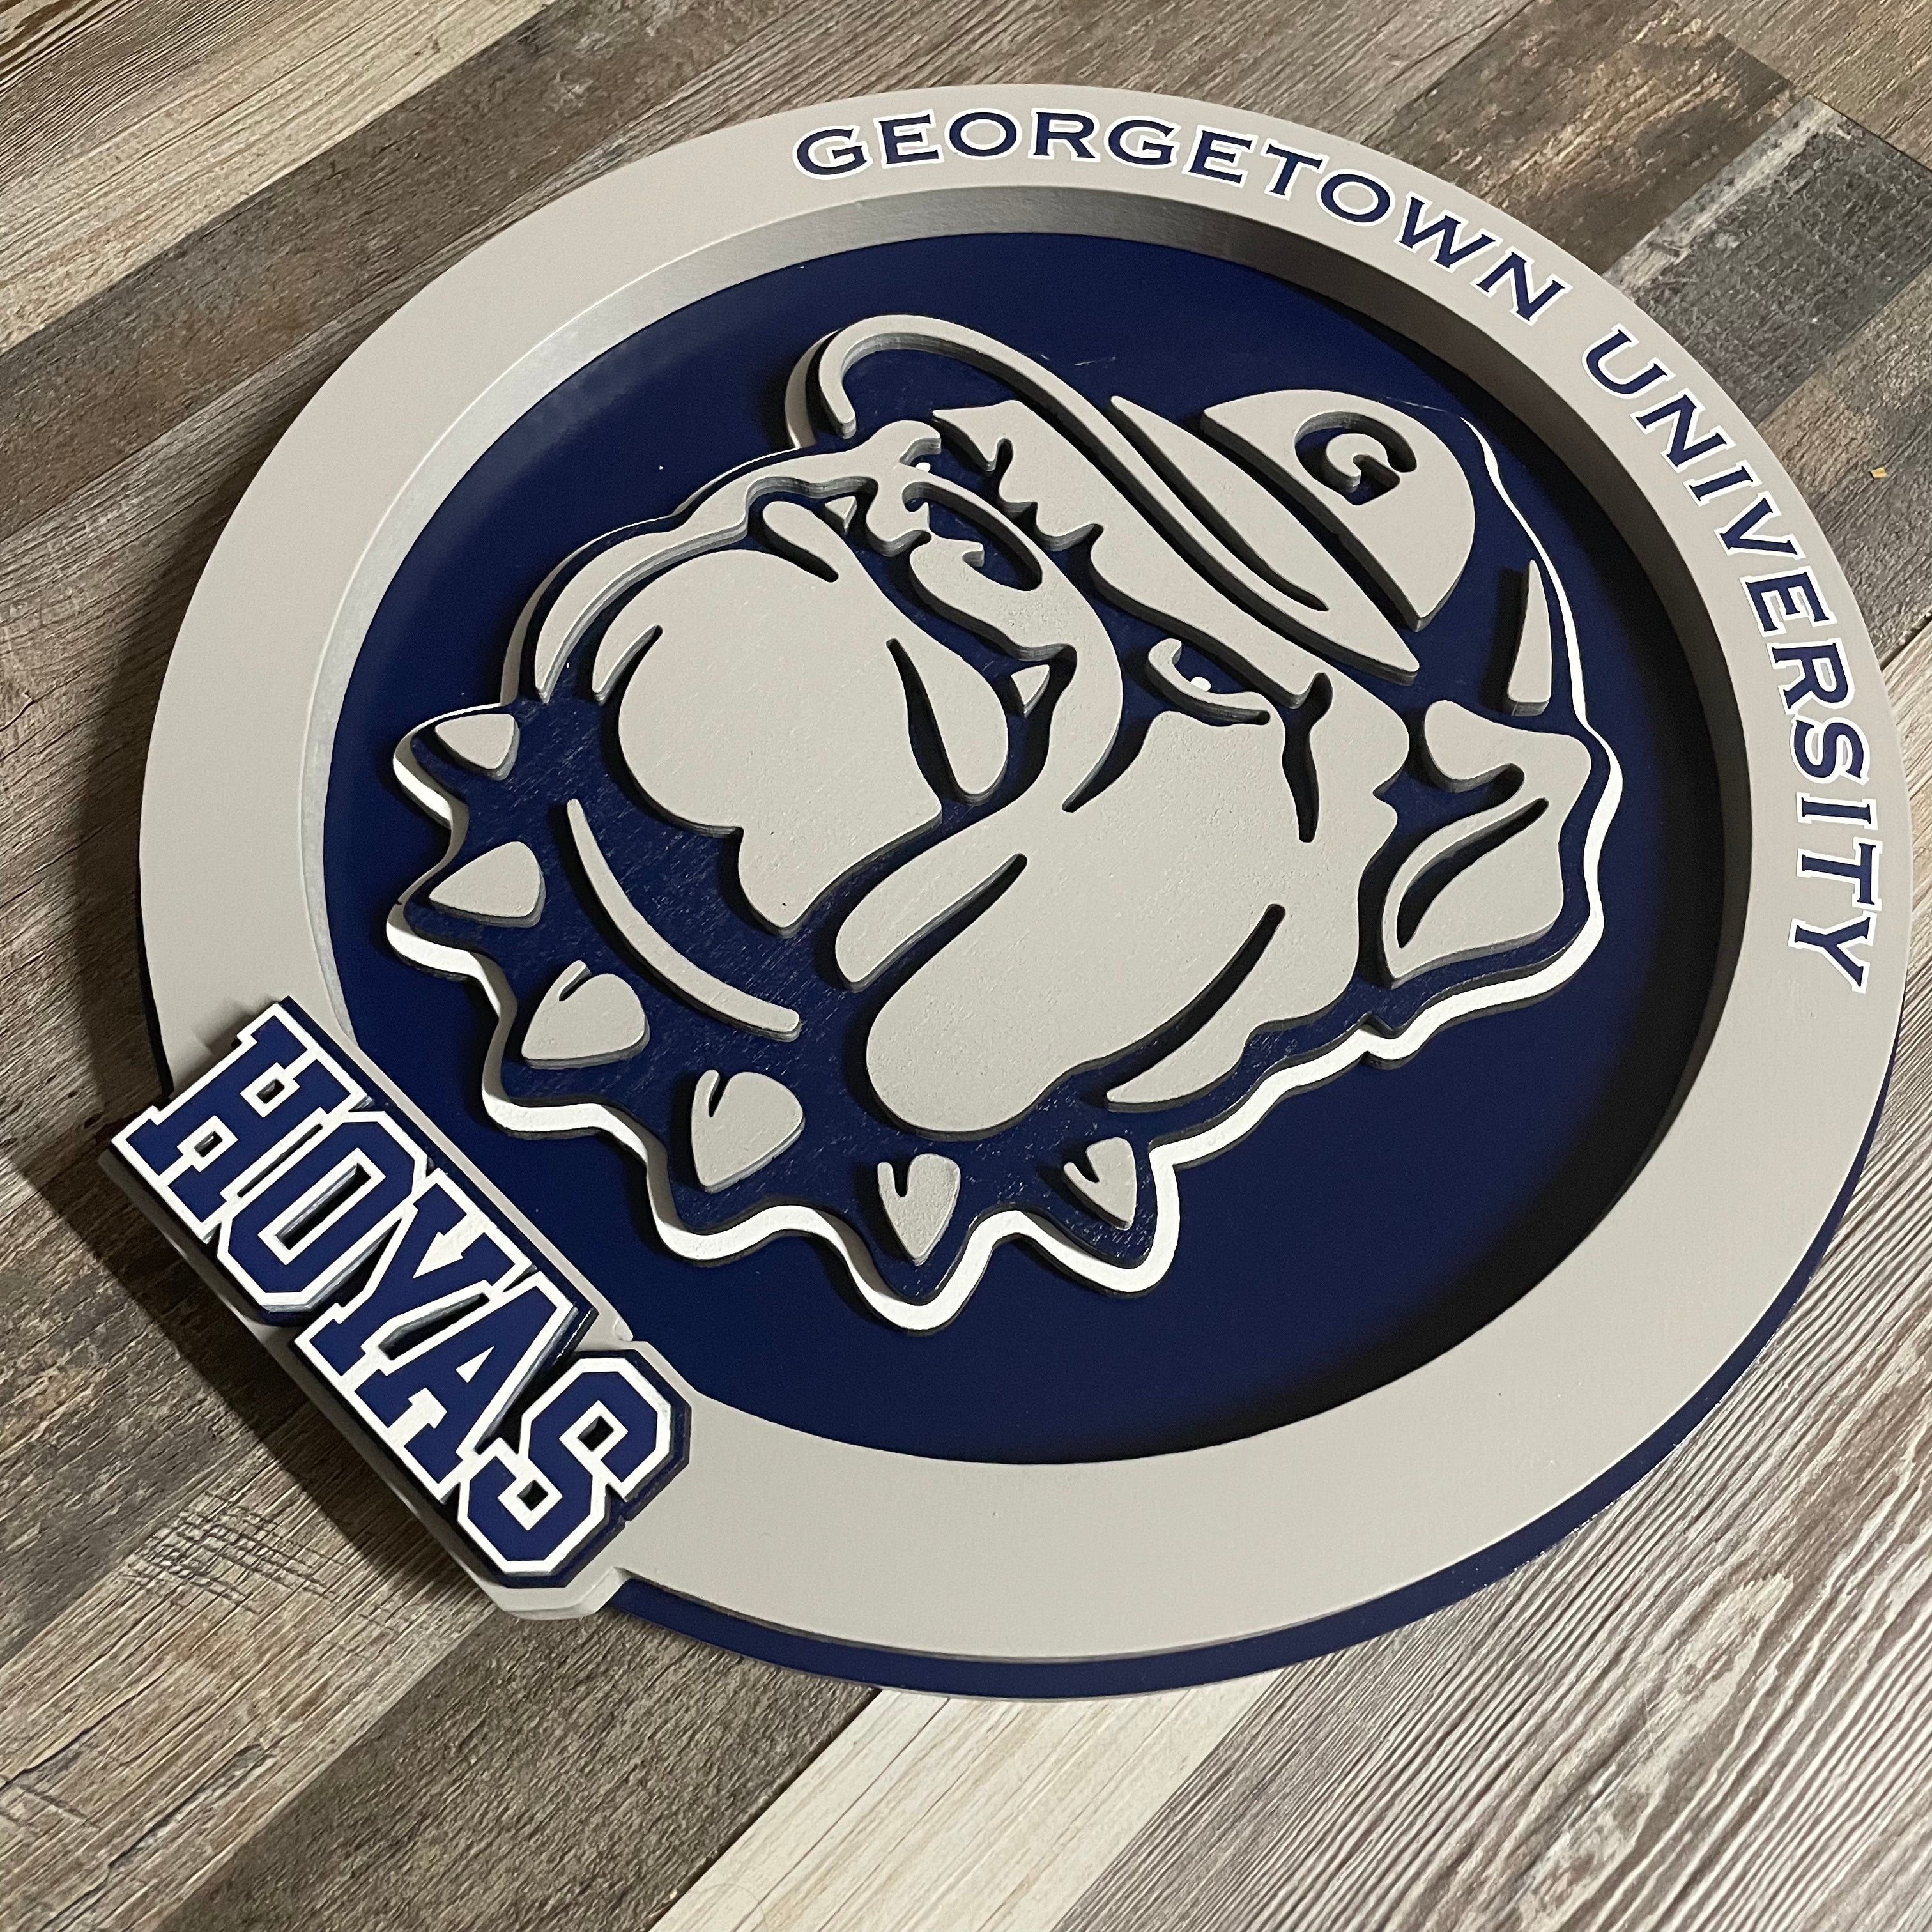 Georgetown University Hoyas - Layered Wood Sign